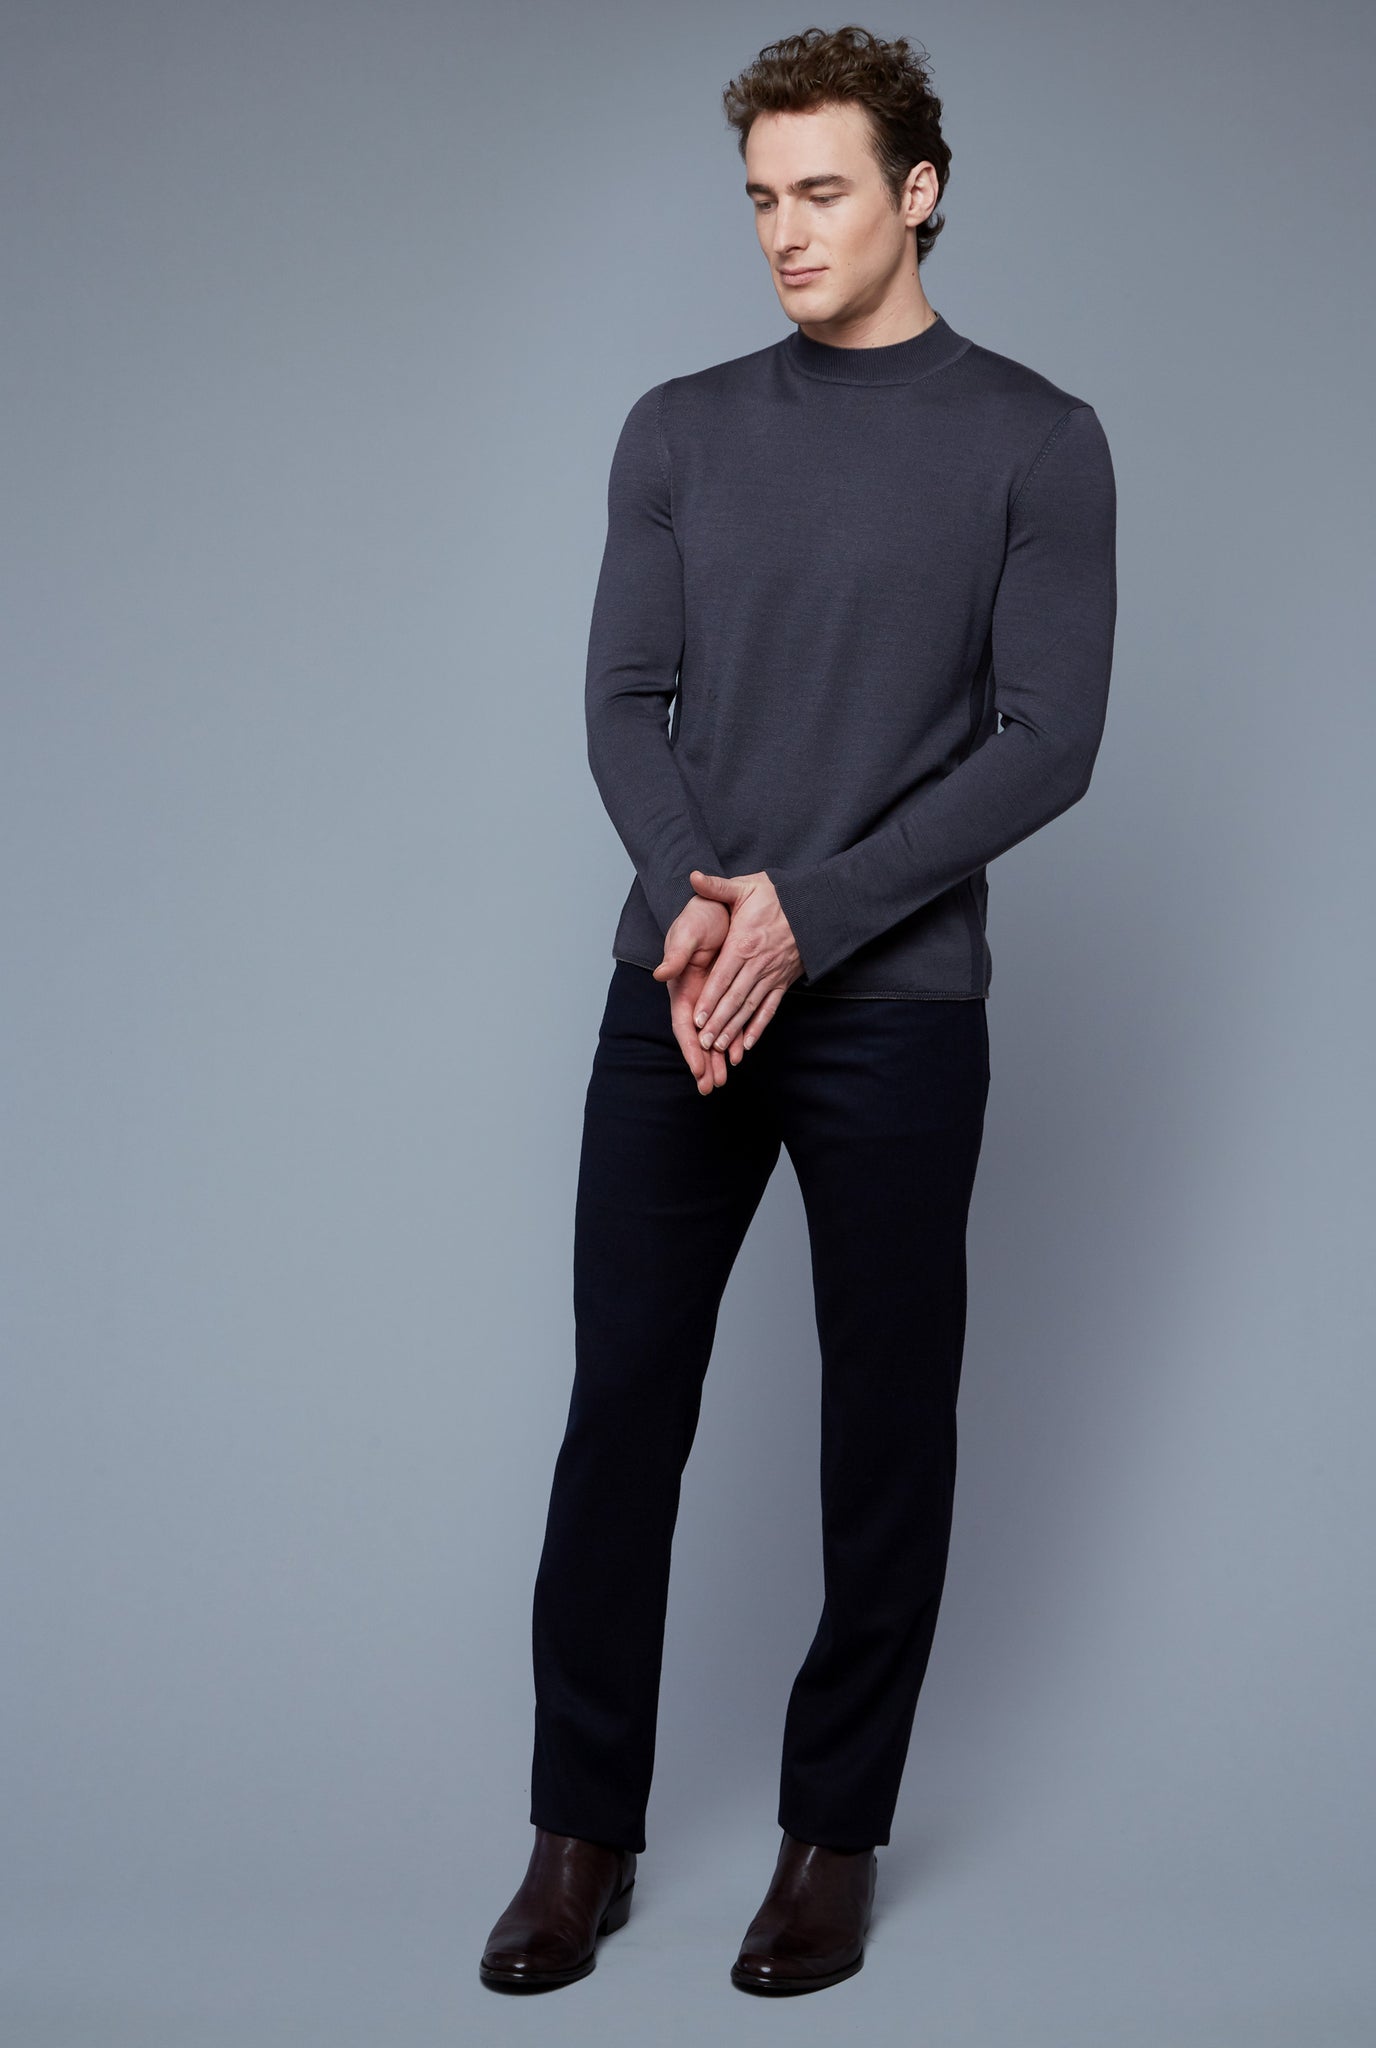 Three Quarter View: Model Hans Weiner wearing Royal Neck Sweater Tee